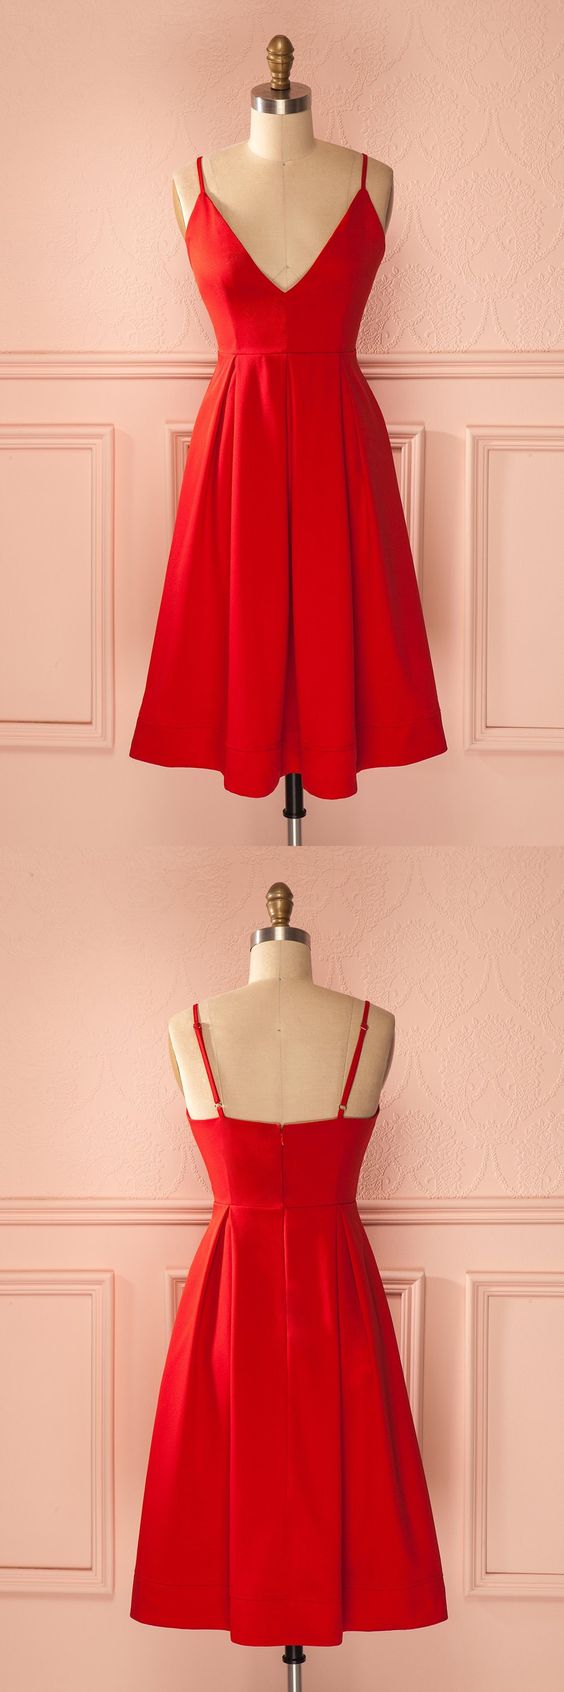 Short Red Homecoming Dress Party Dress, 2017 Short Red Dancing Dress ...